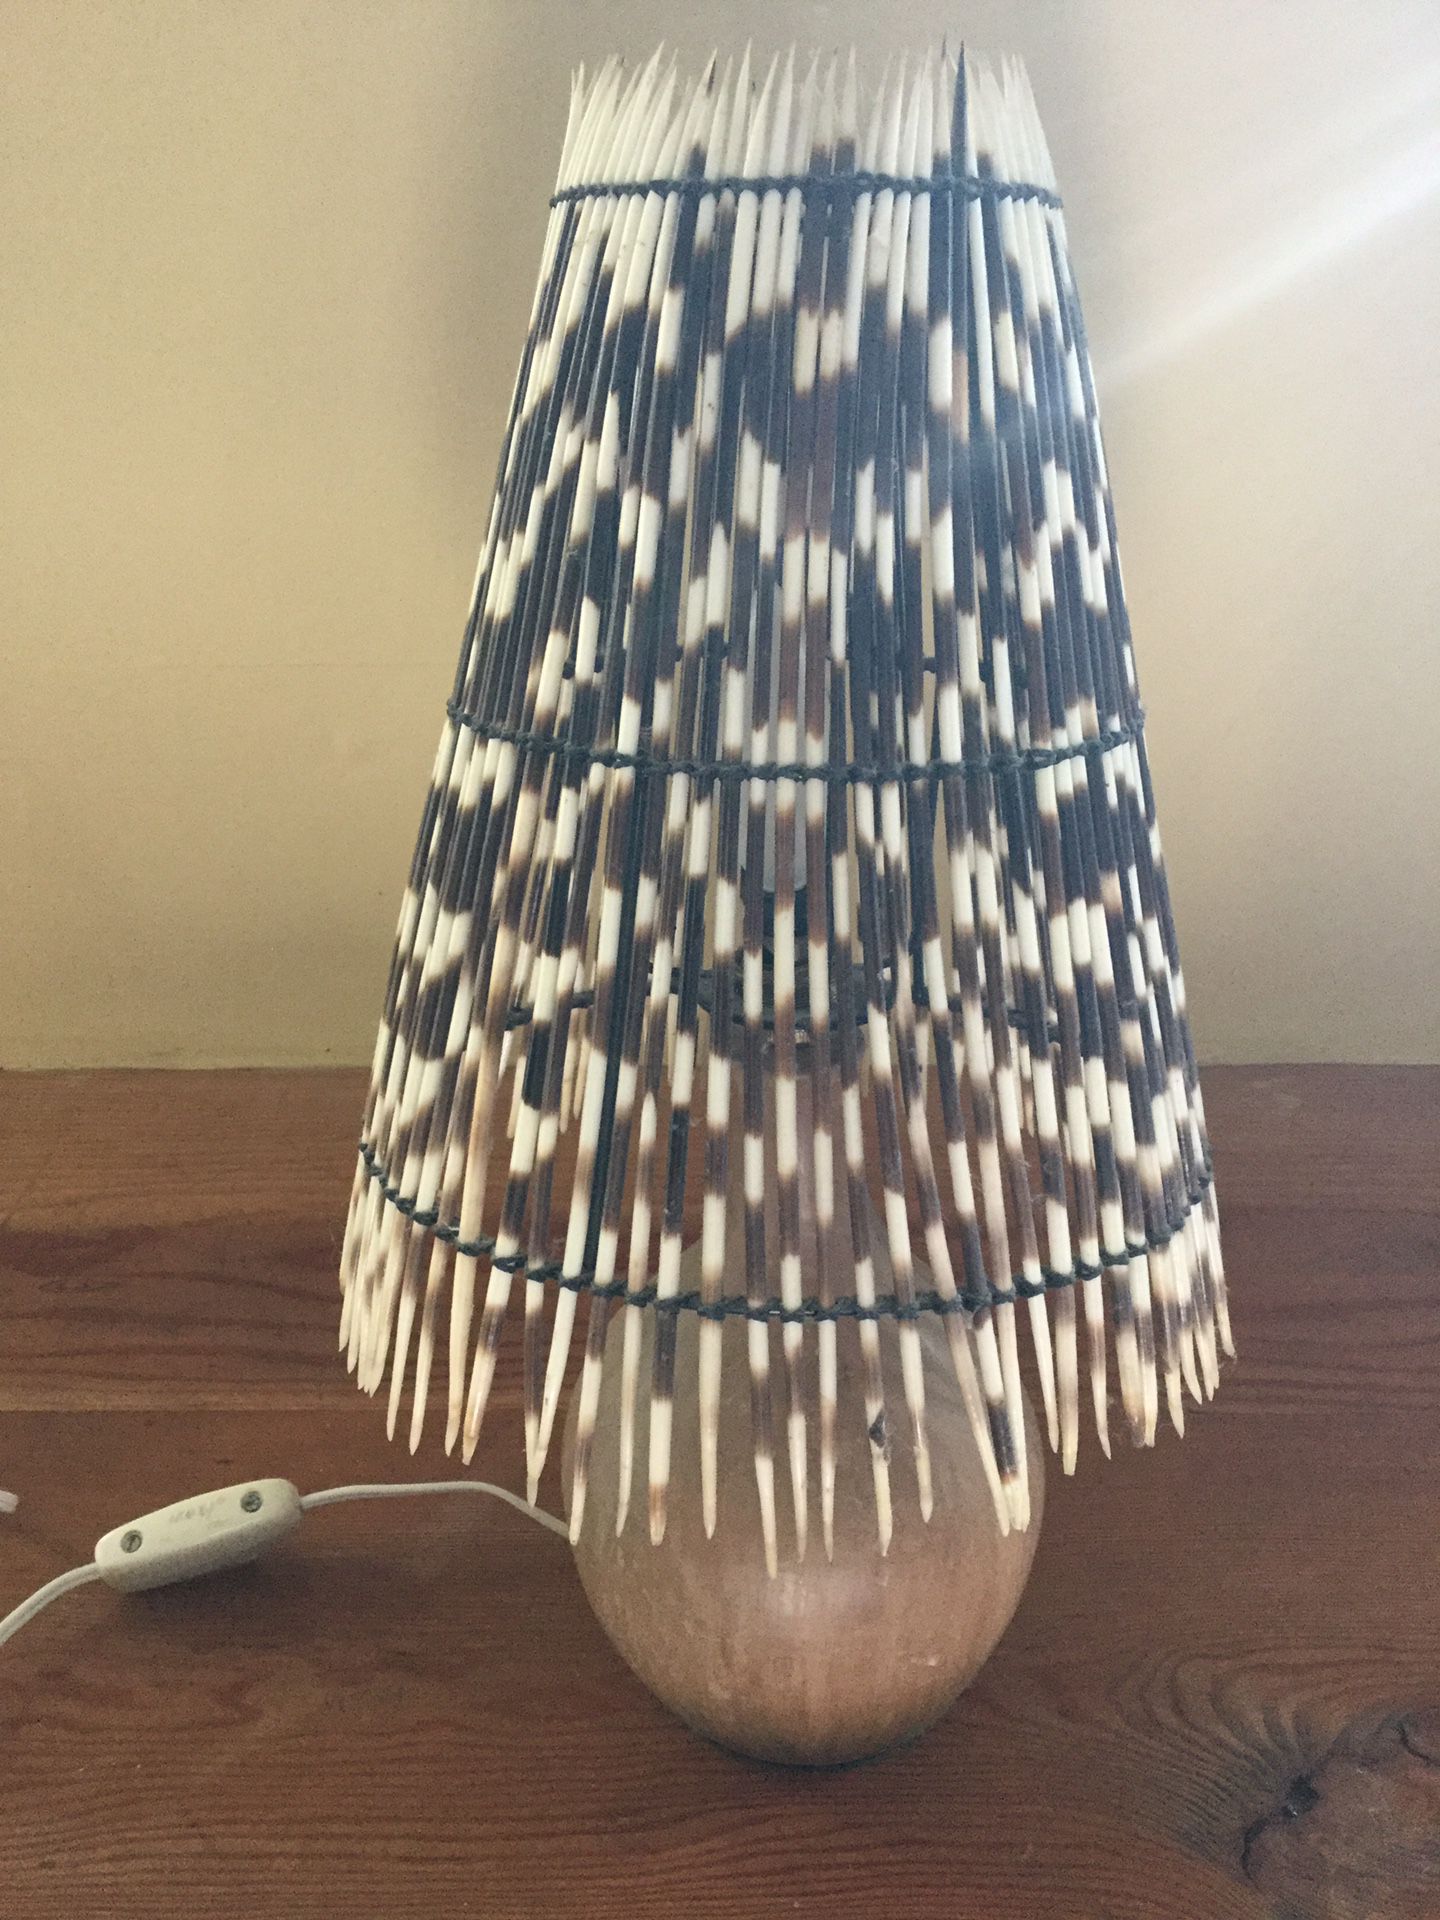 Cape porcupine quill lampshade on ceramic lamp